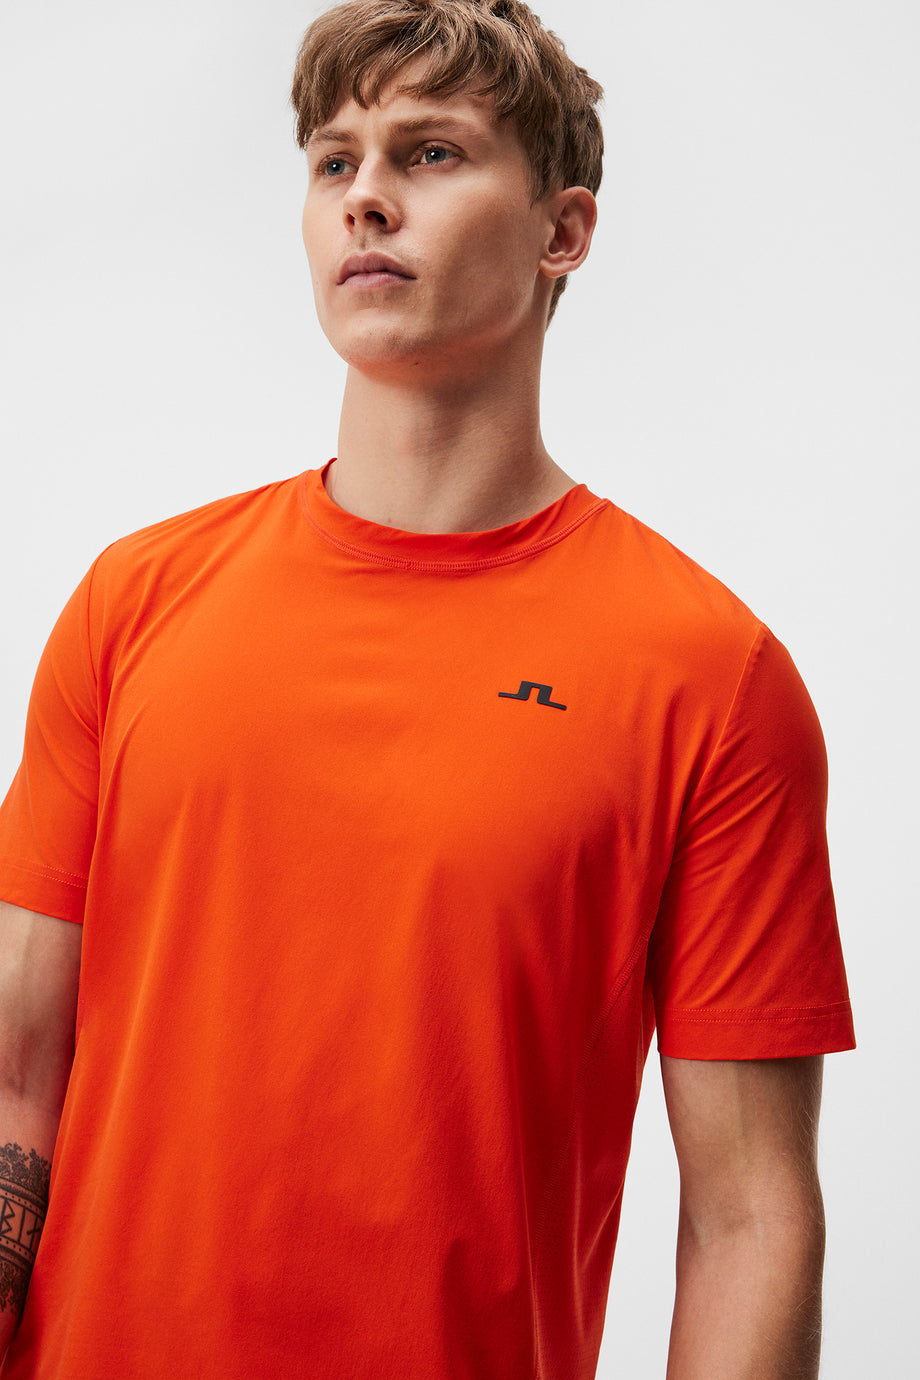 Tomas Pro Pack T-Shirt / Tangerine Tango